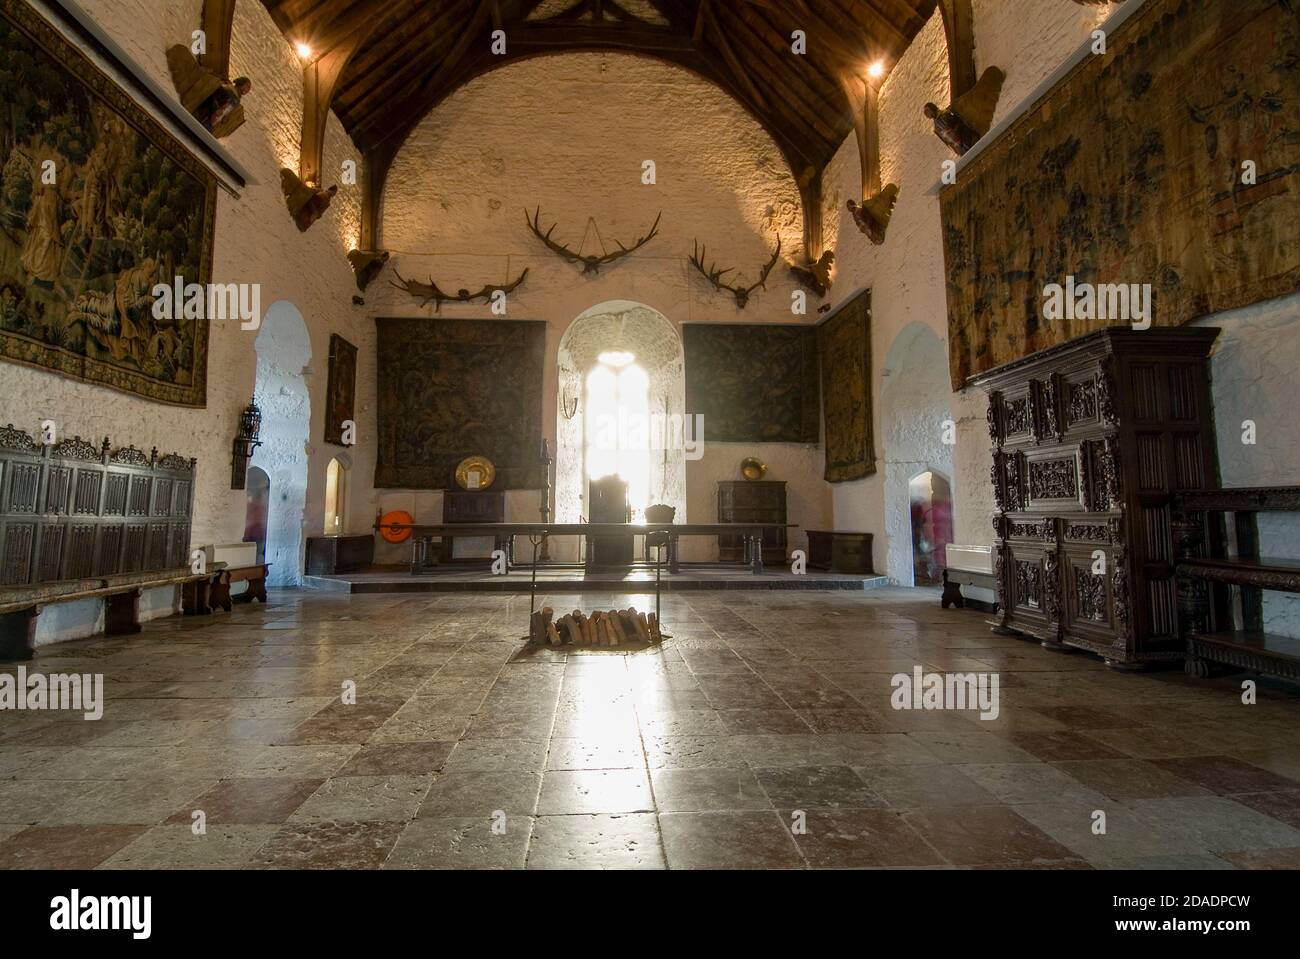 Interior of Bunratty castle, Co. Clare Ireland Stock Photo